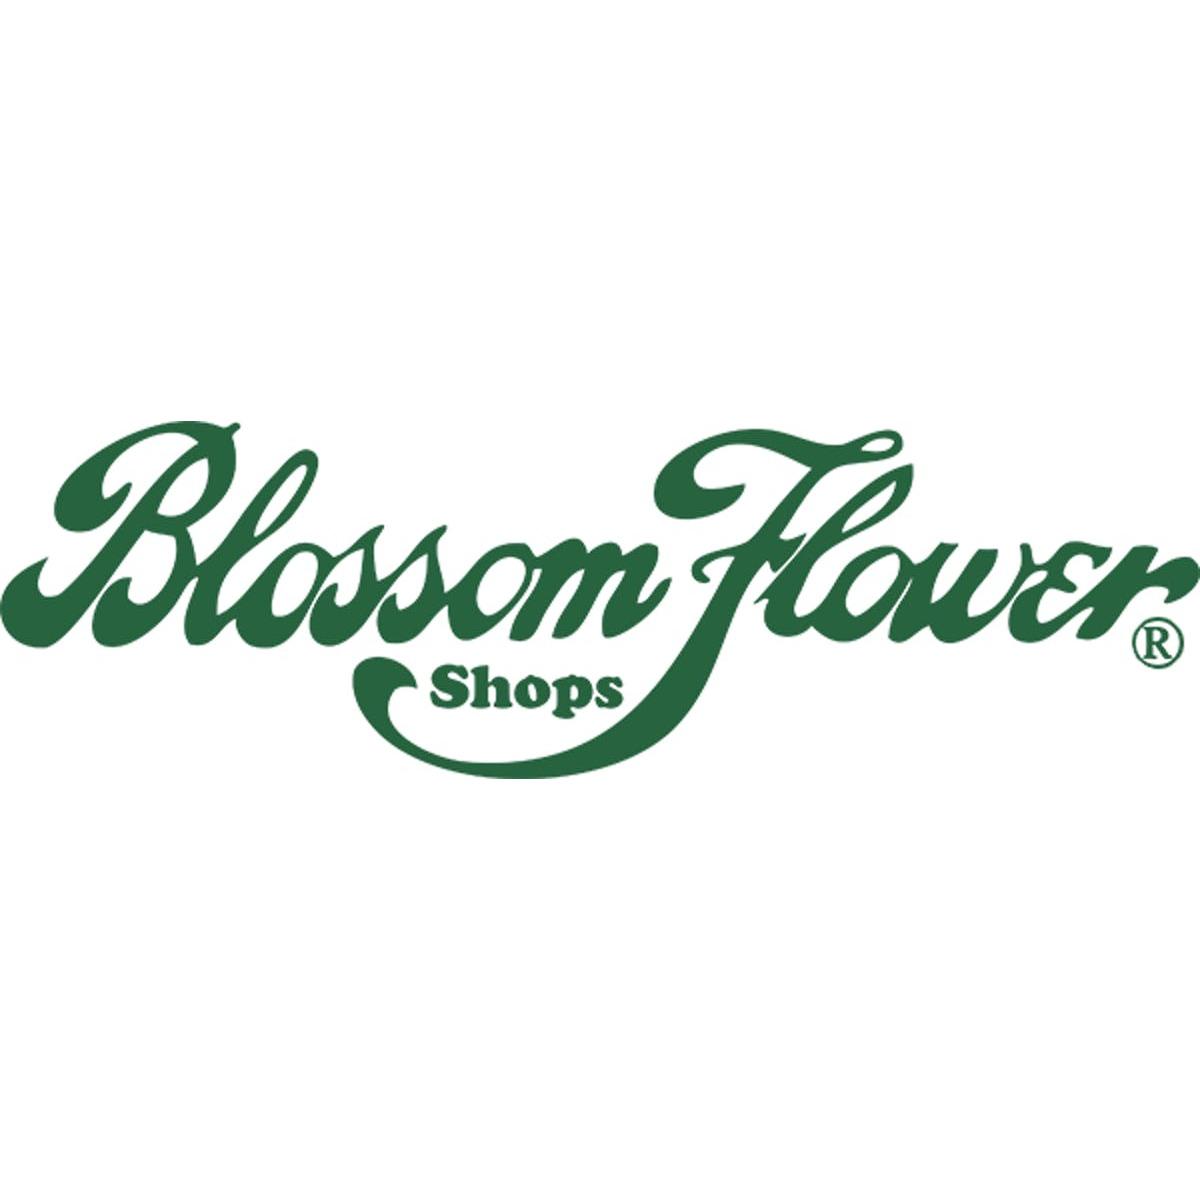 Blossom Flower Shops Photo